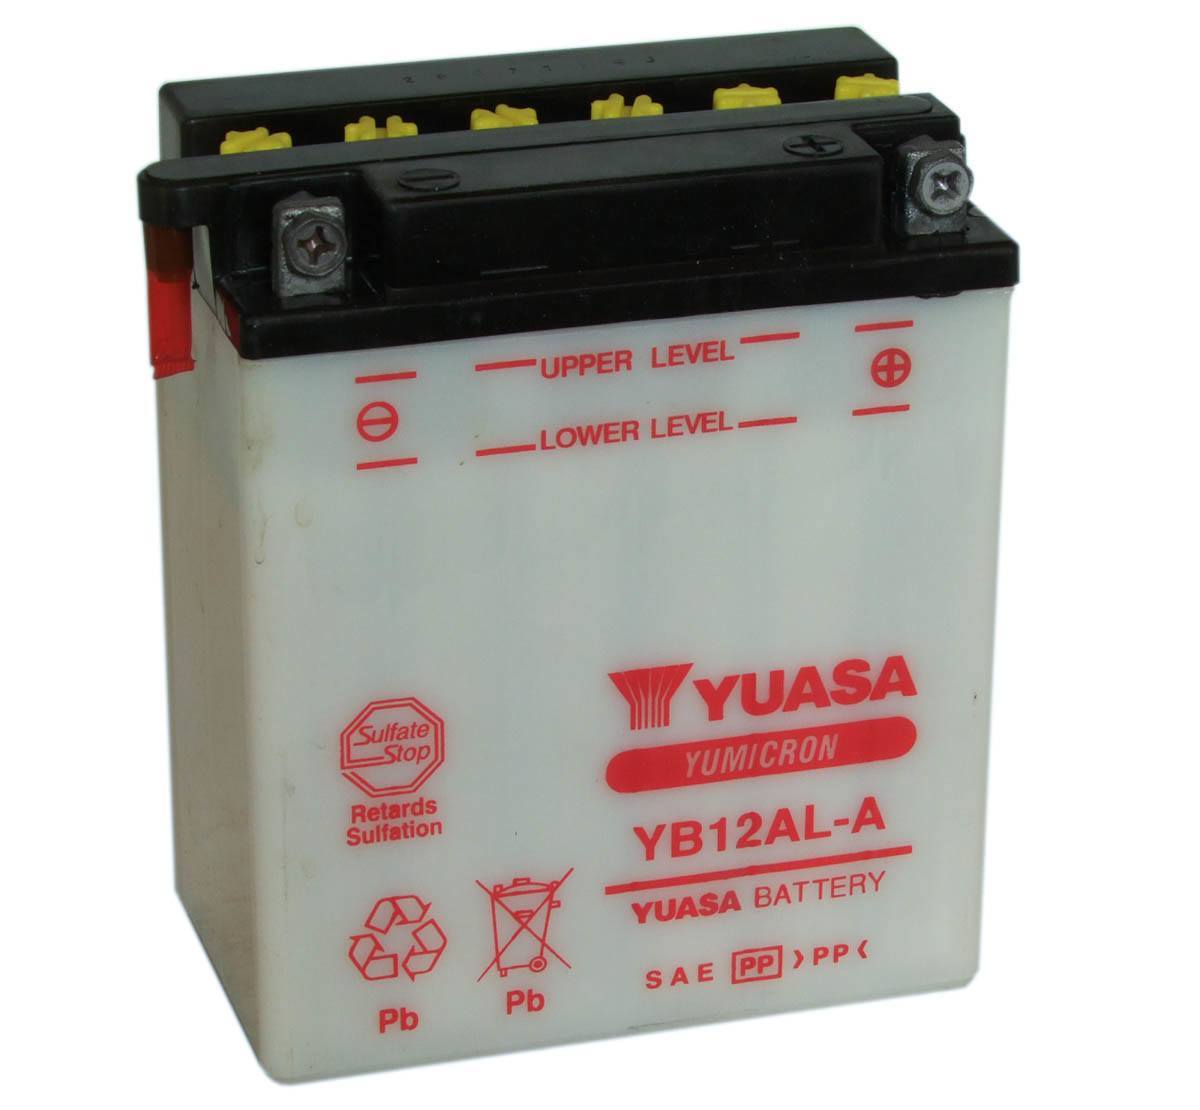 Yuasa YB12AL-A 12V Motorbike Battery